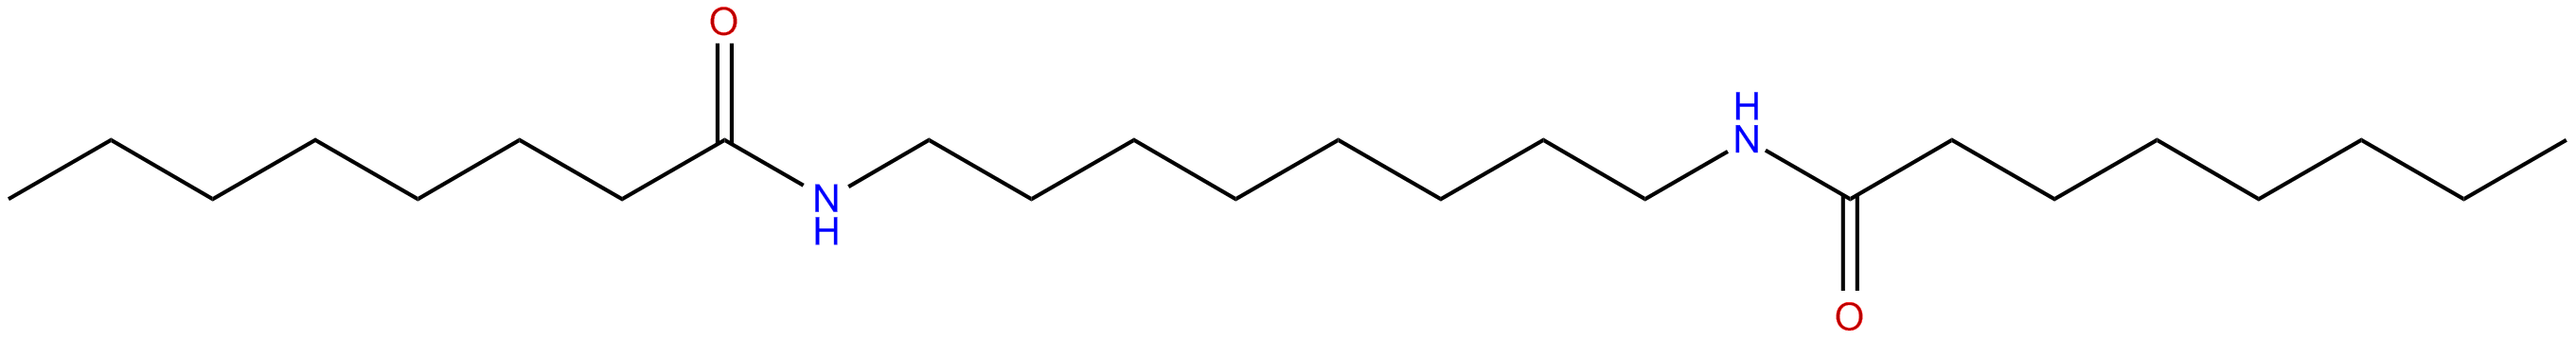 Image of N,N'-1,8-octanediylbisoctanamide